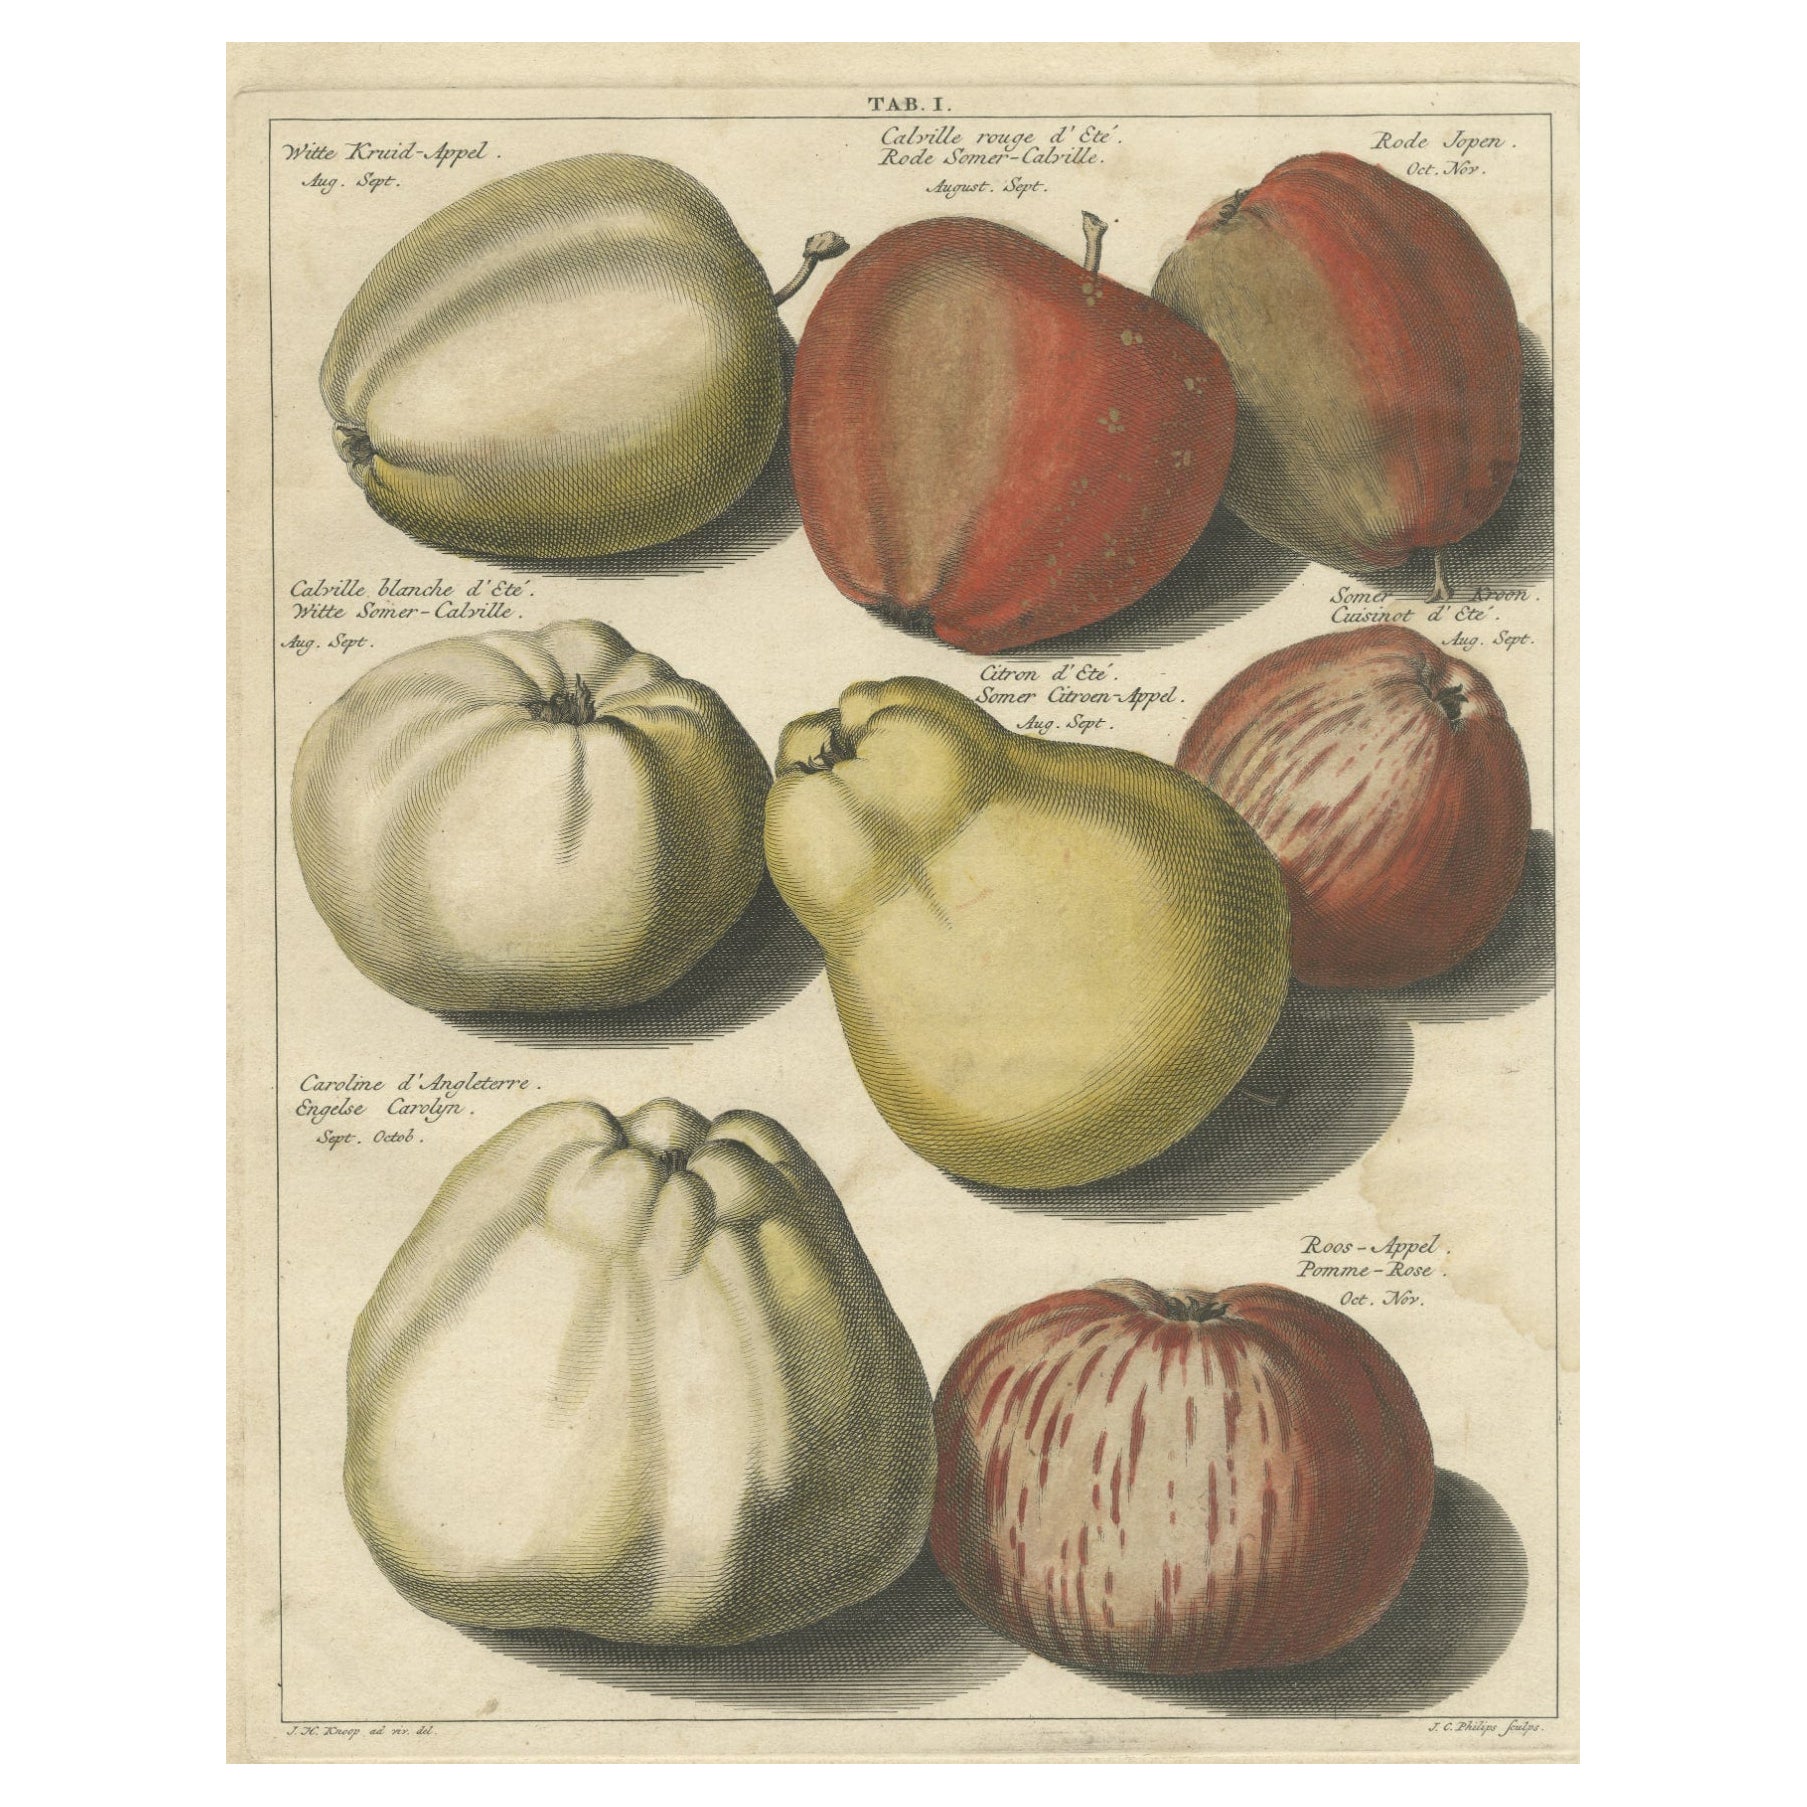 Original Antique Hand-Colored Print of Various Apples, 1758